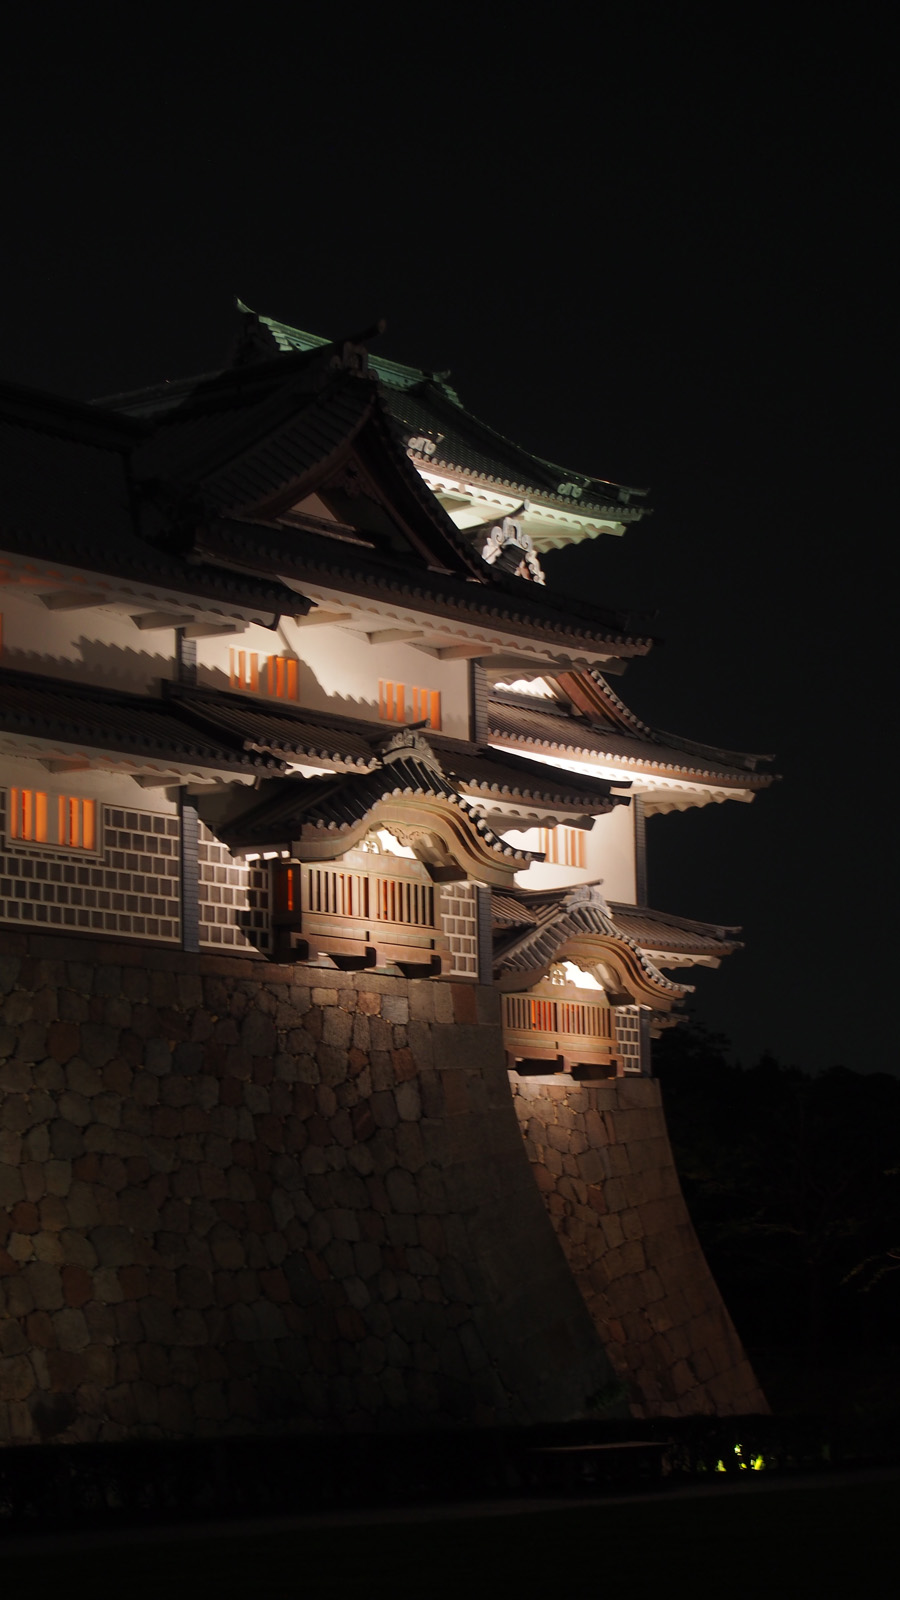 Twilight of Kanazawa Castle, Ishikawa Pref.